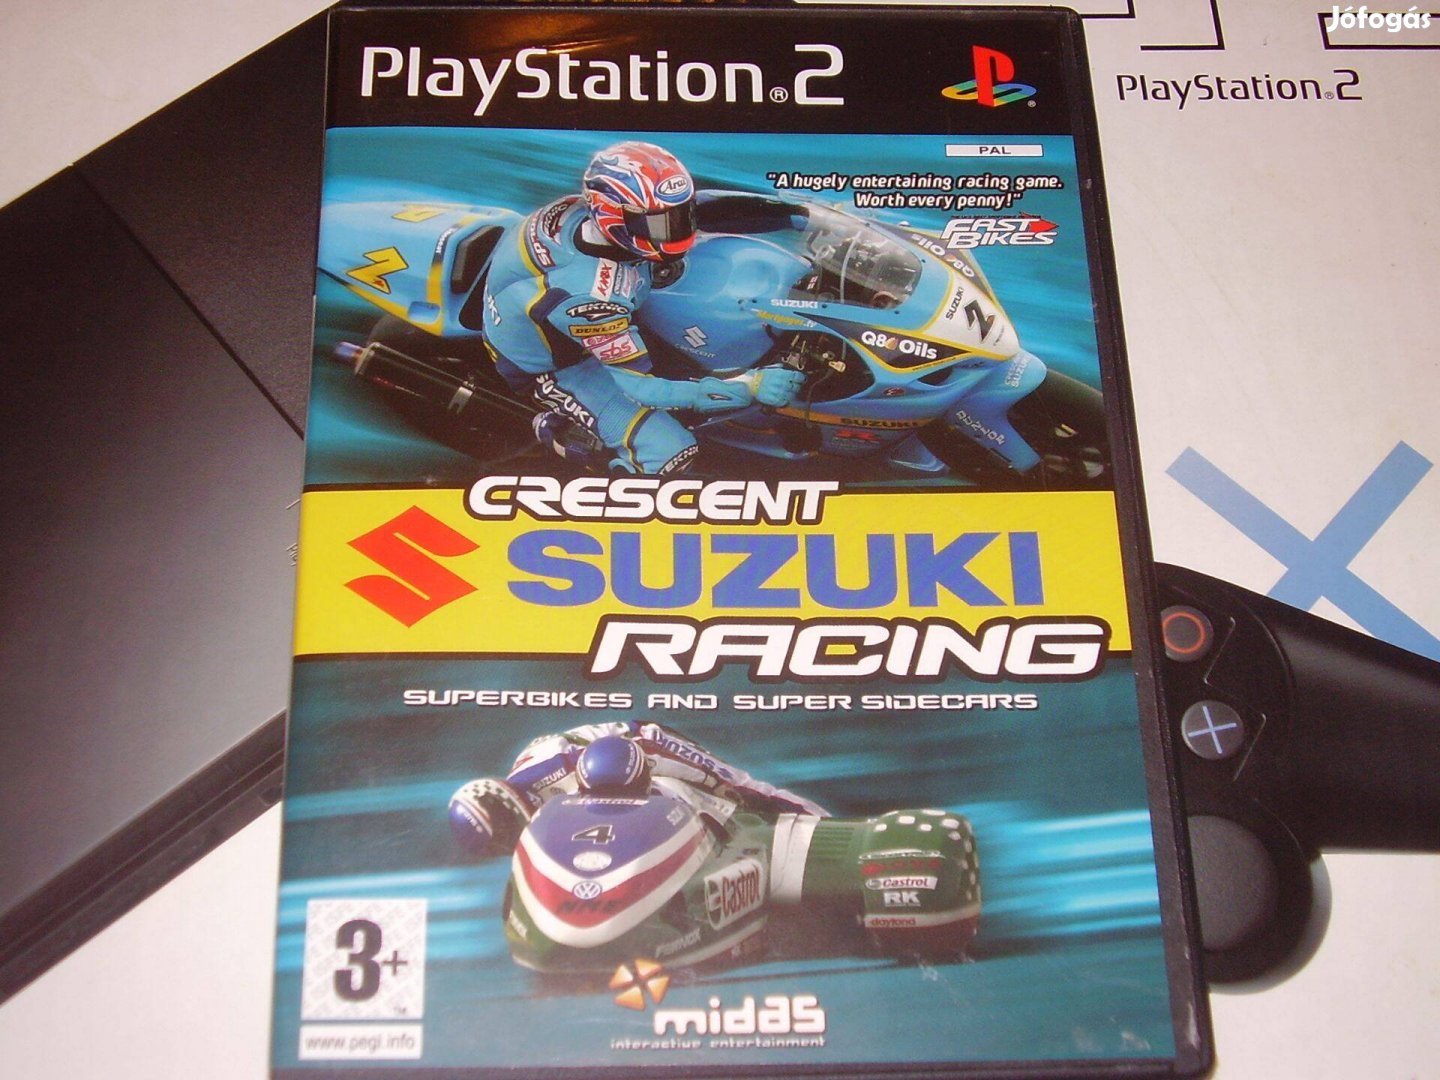 Suzuki Racing Playstation 2 eredeti lemez eladó